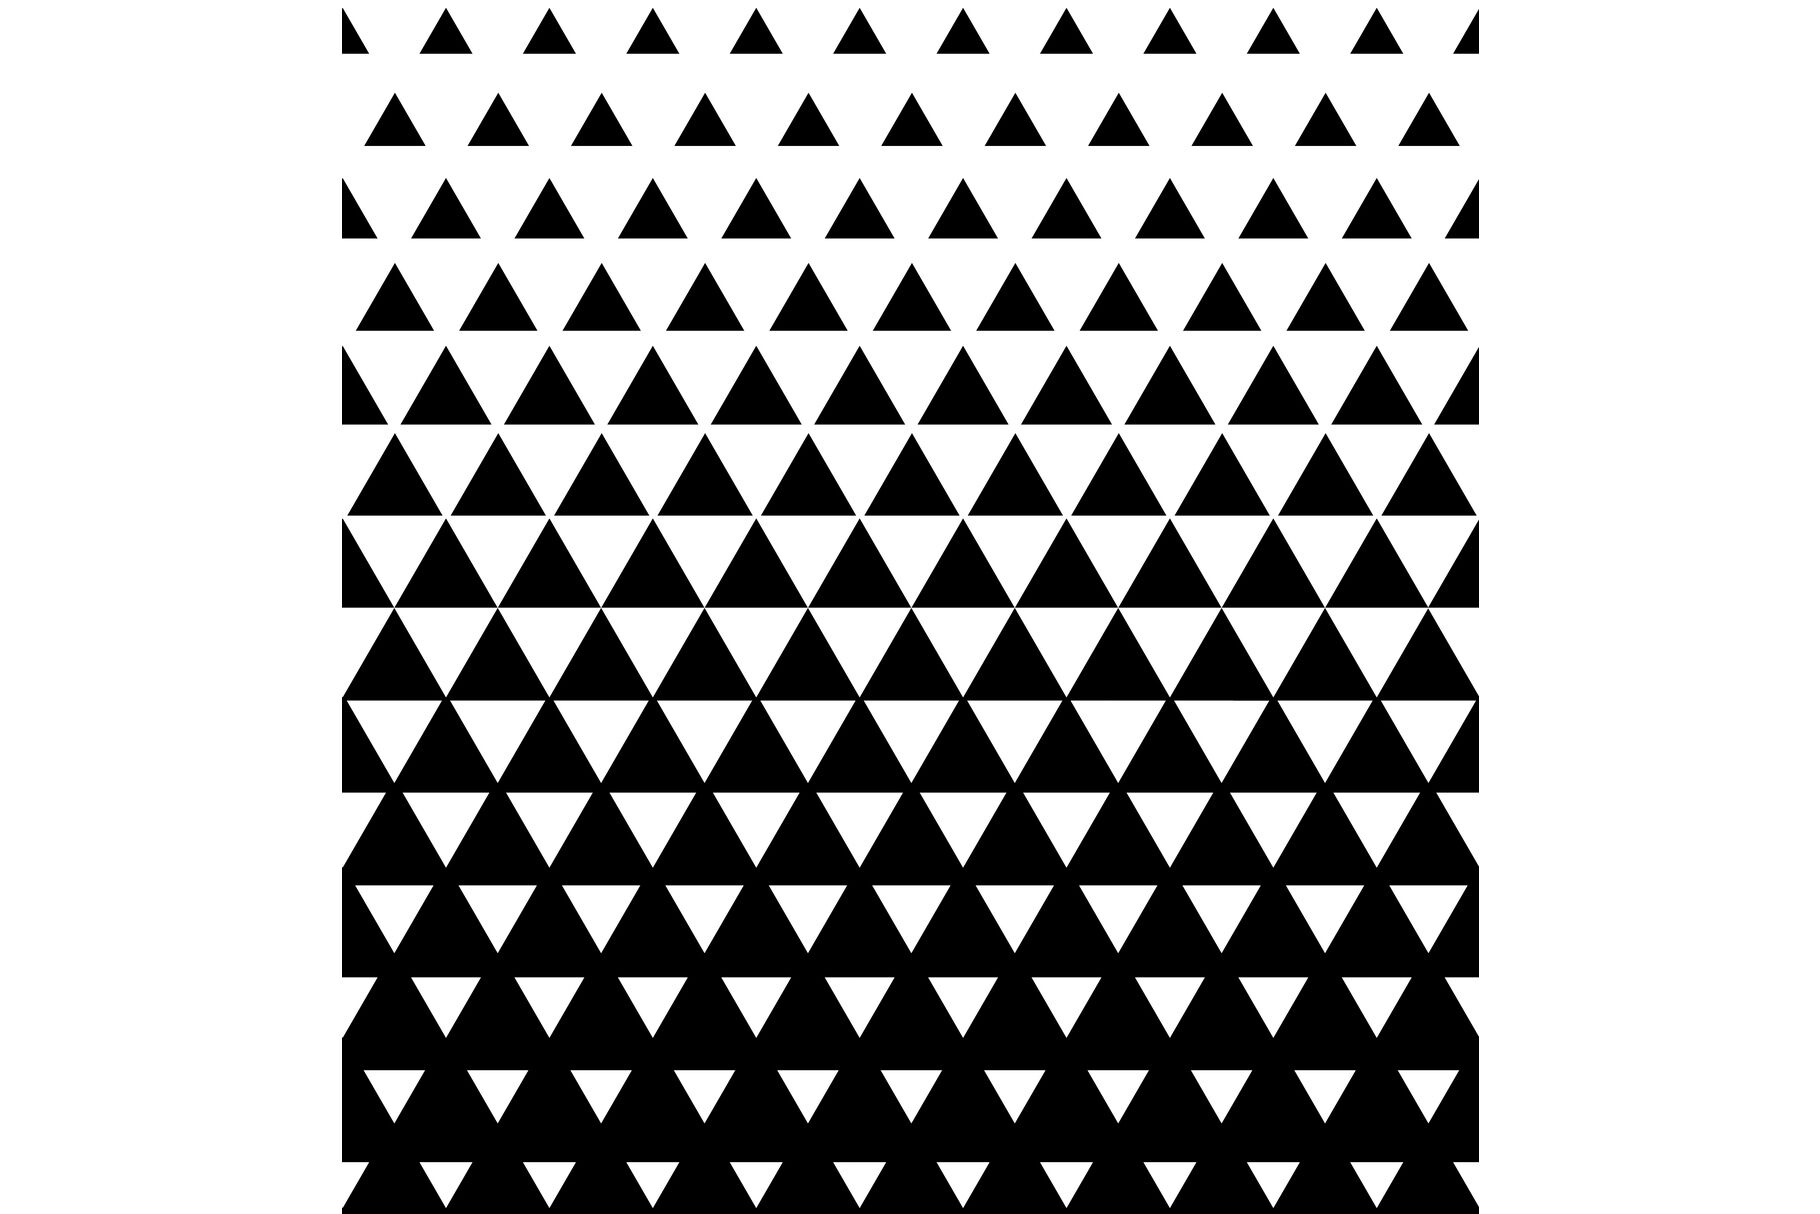 https://media1.thehungryjpeg.com/thumbs2/ori_3744781_yp3lbv8wyc42bt0eswjtaqhmcnwvkazu27mryxg1_halftone-triangular-pattern-vector-abstract-transition-triangular-pattern-wallpaper-seamless-black-and-white-triangle-geometric-background.jpg